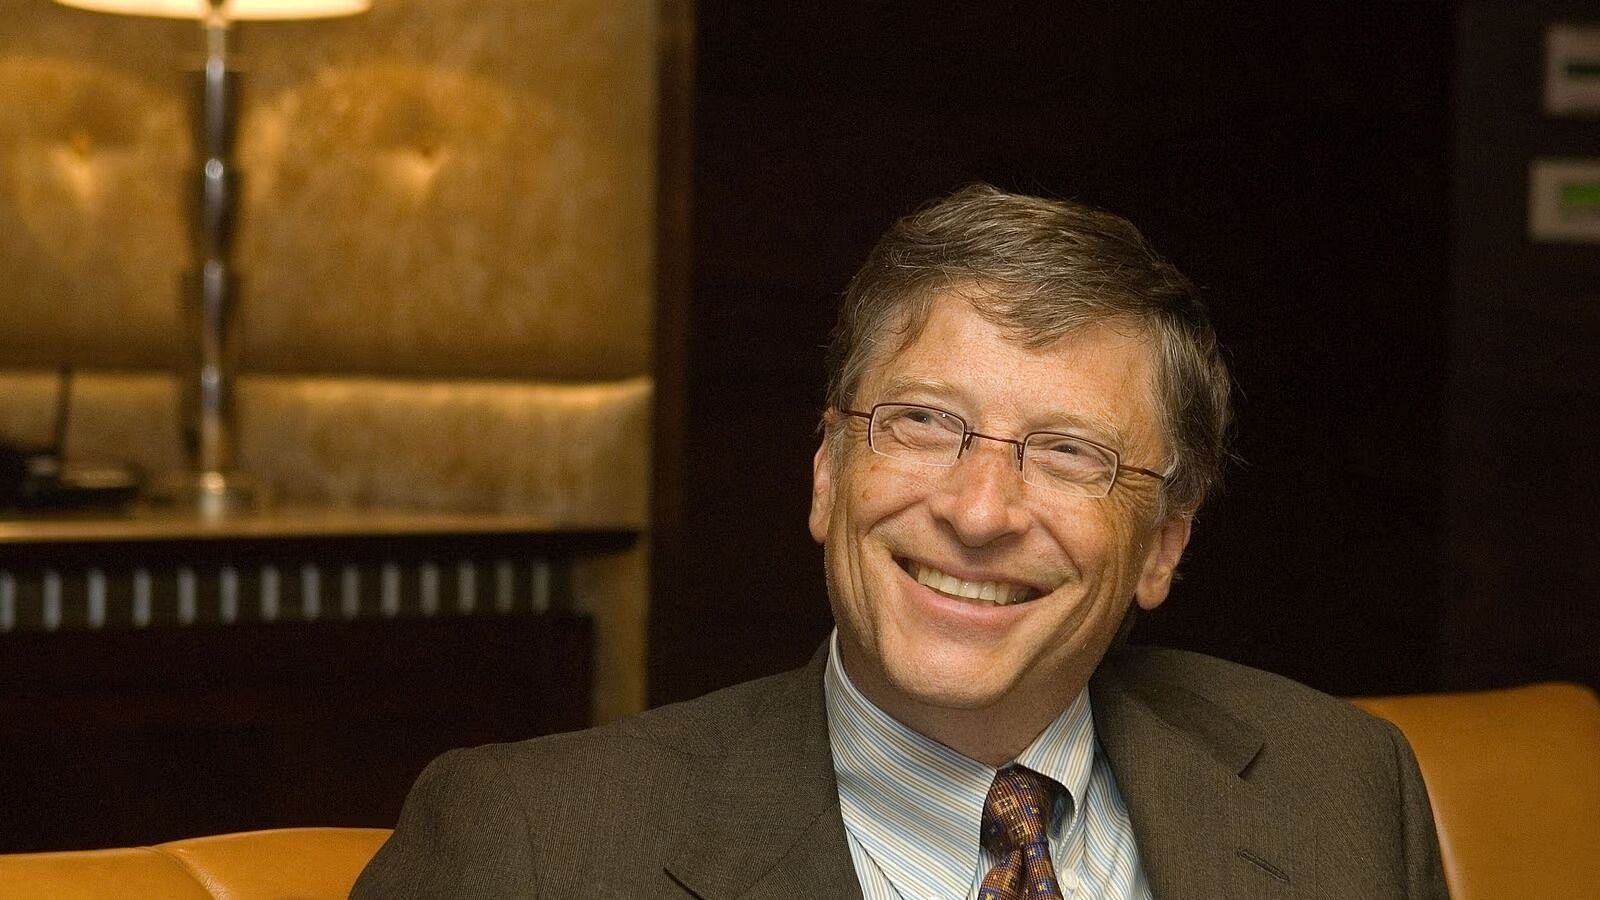 Bill Gates (Image via Getty Images)